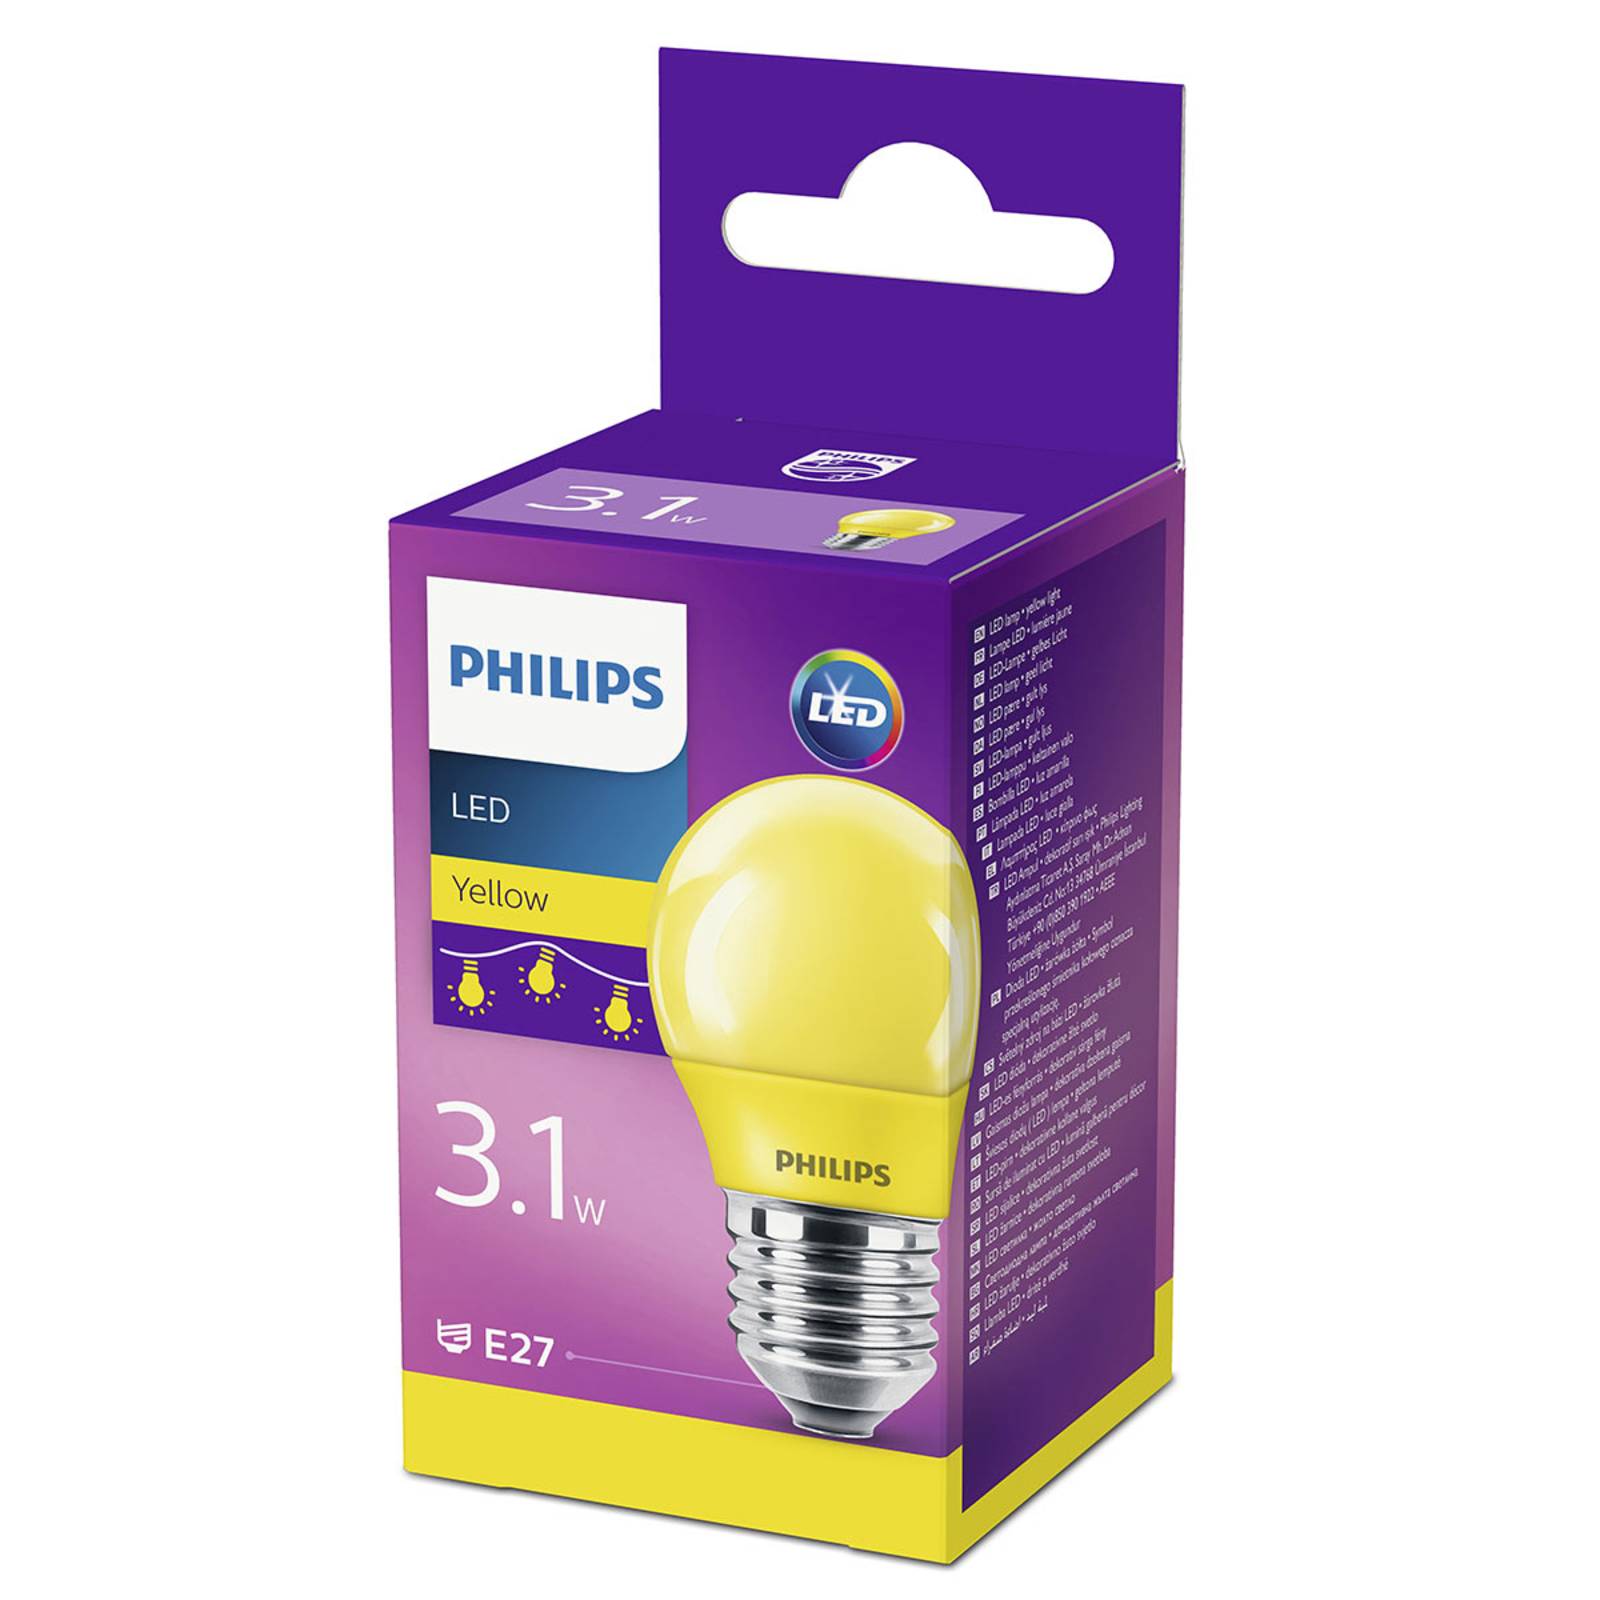  Philips E27 P45 Led Lampe 3,1w, Gelb 